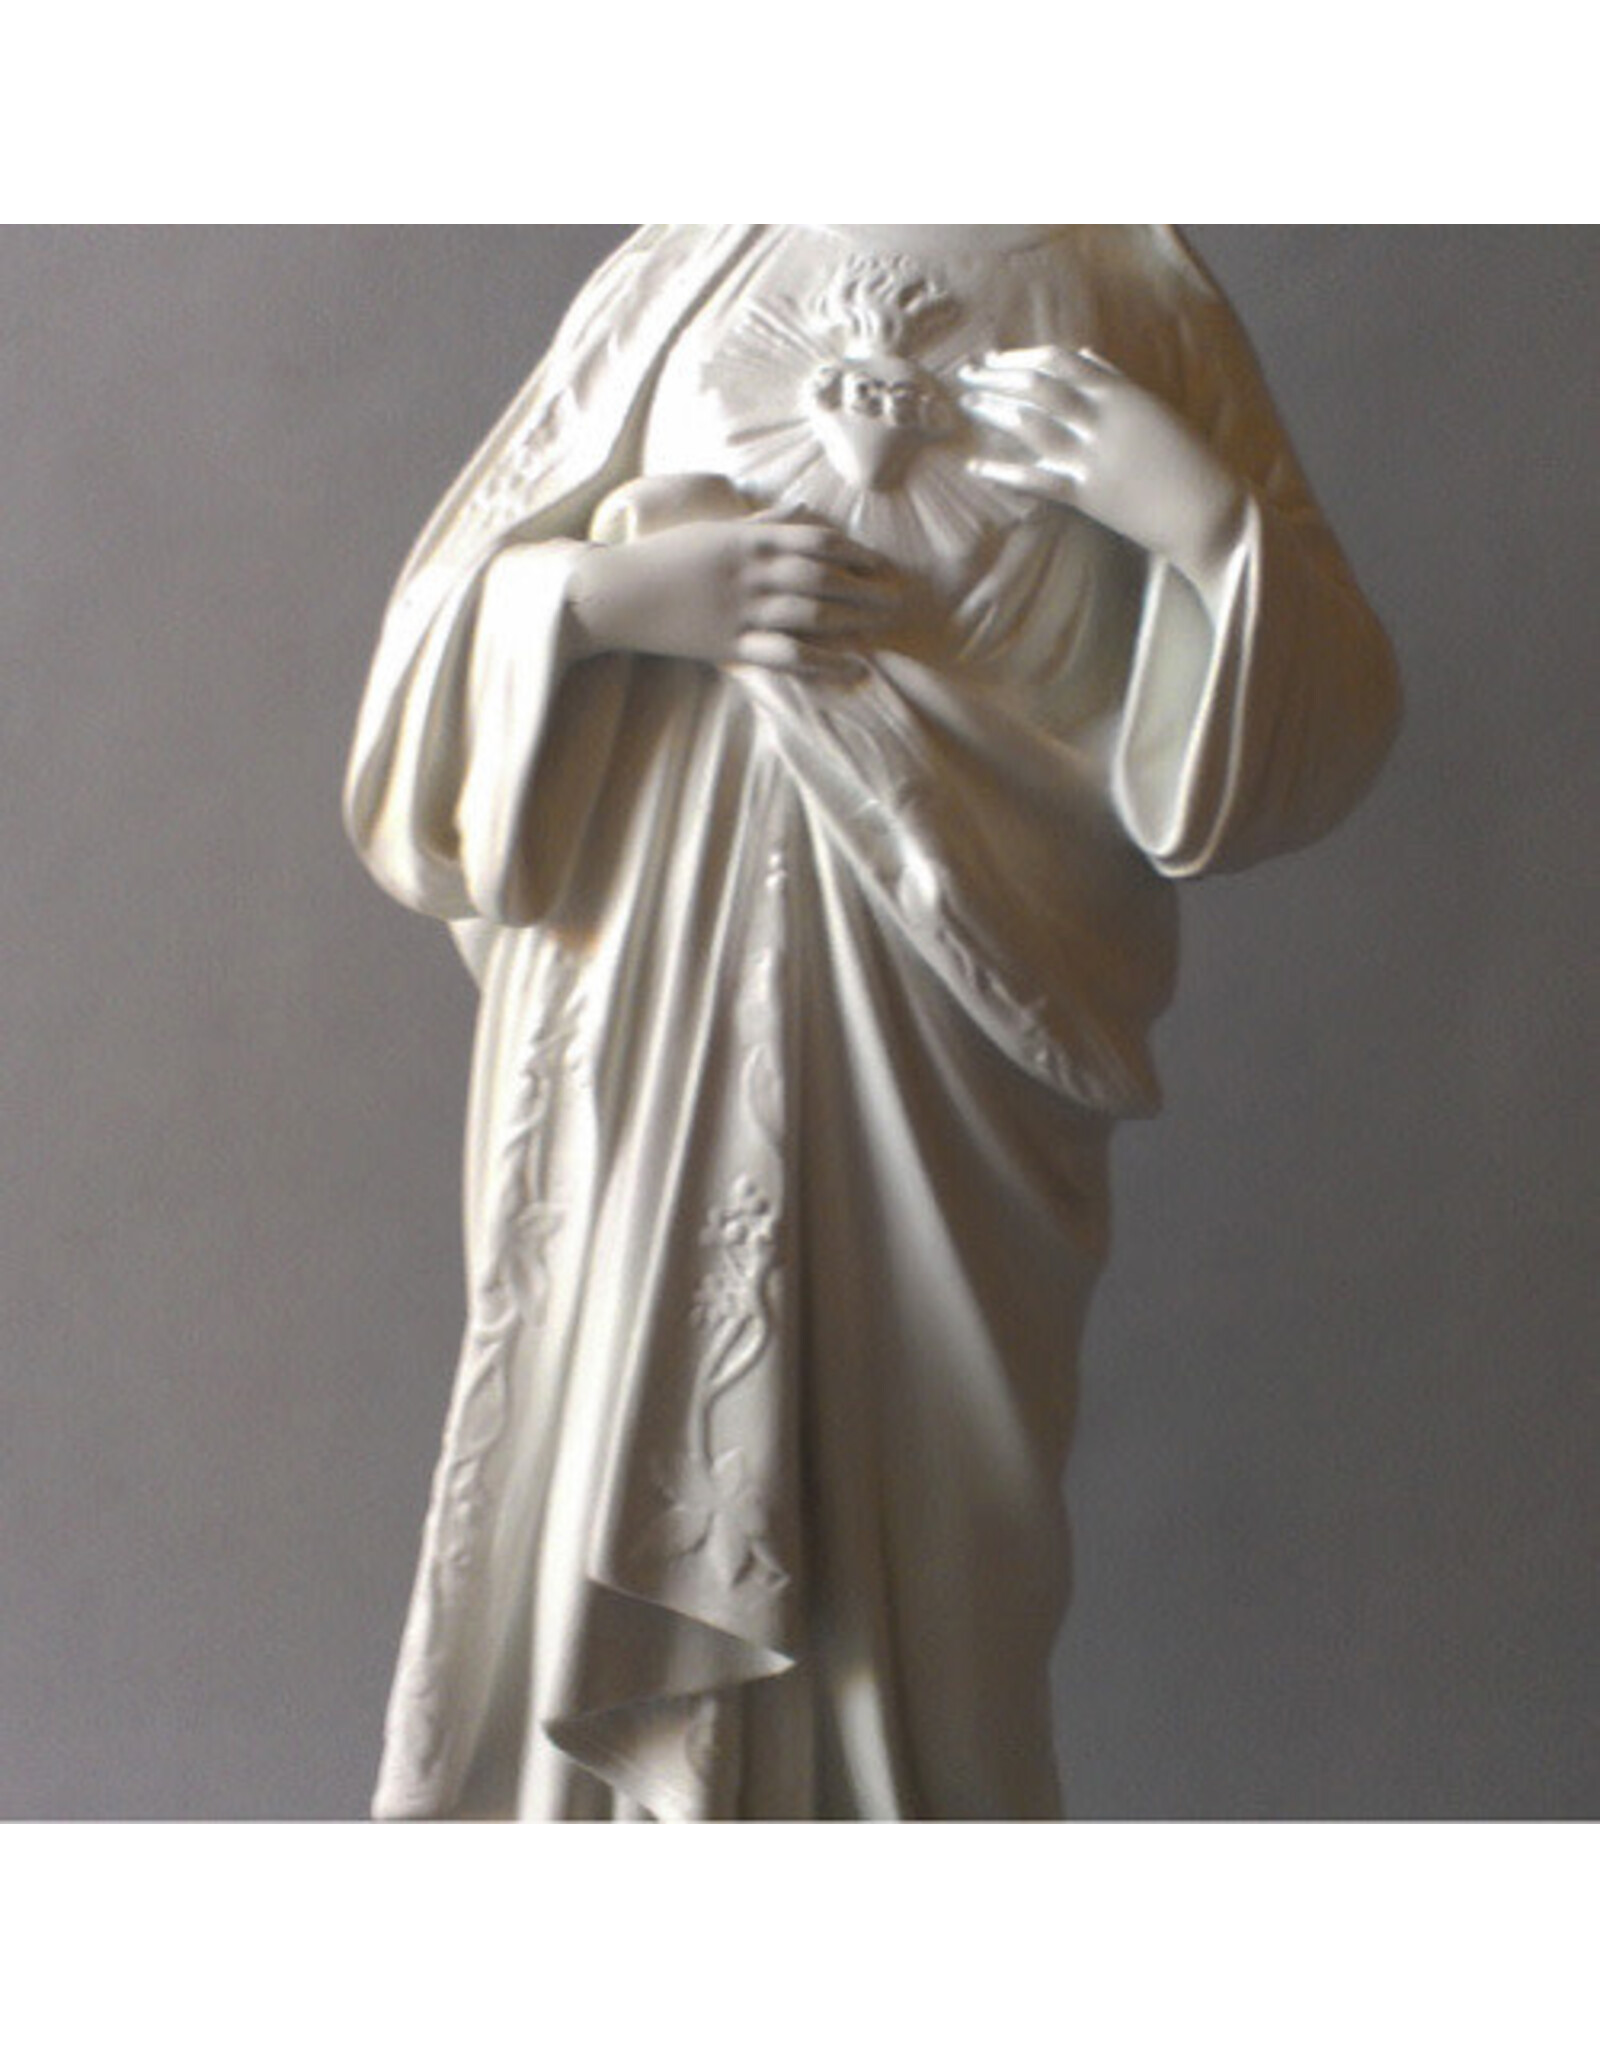 Orlandi Statue - Immaculate Heart of Mary, Flat White Finish (16")